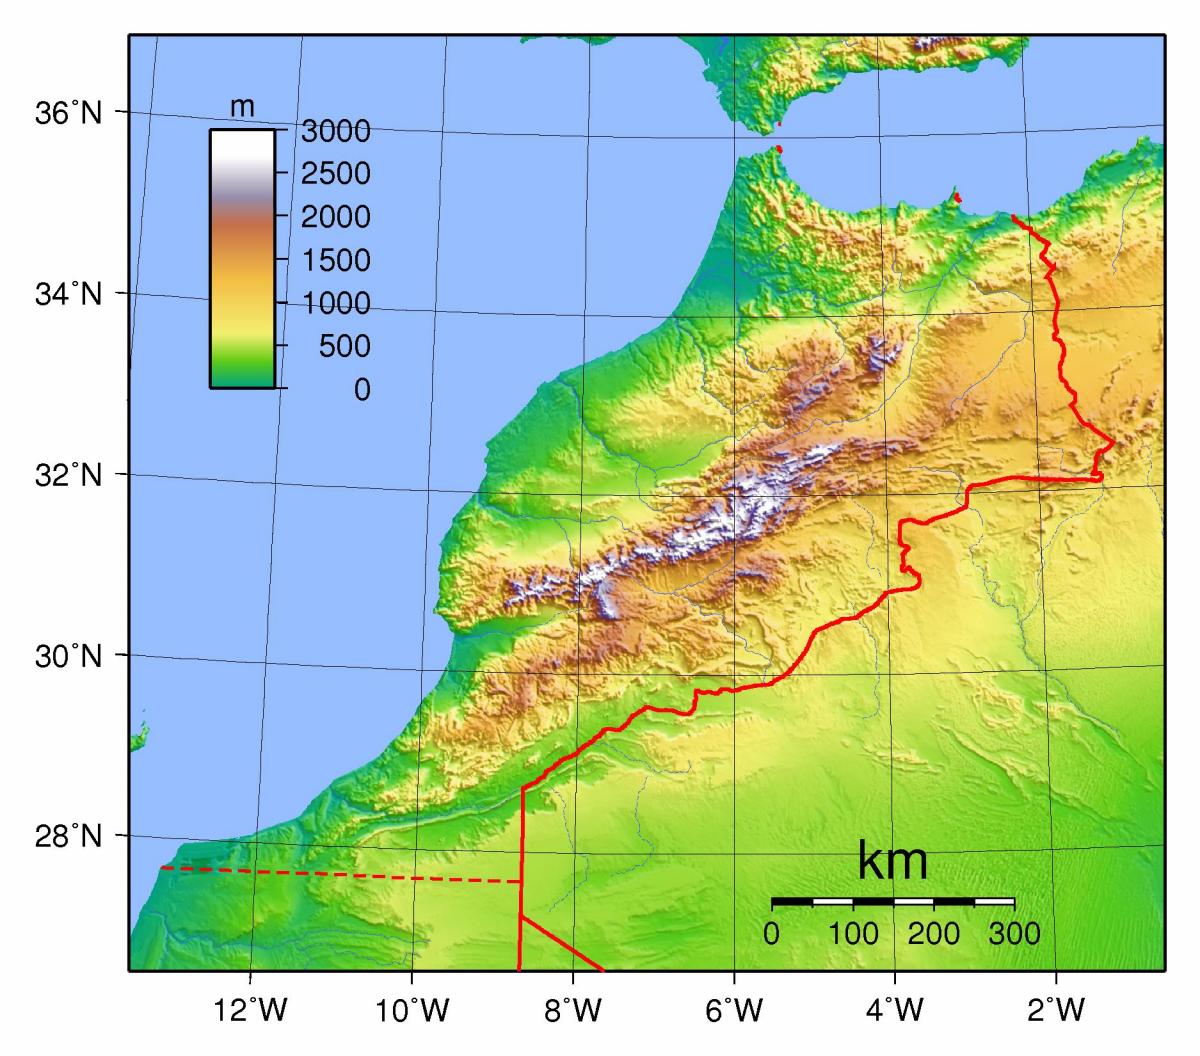 Mapa de la forma de la tierra de Marruecos